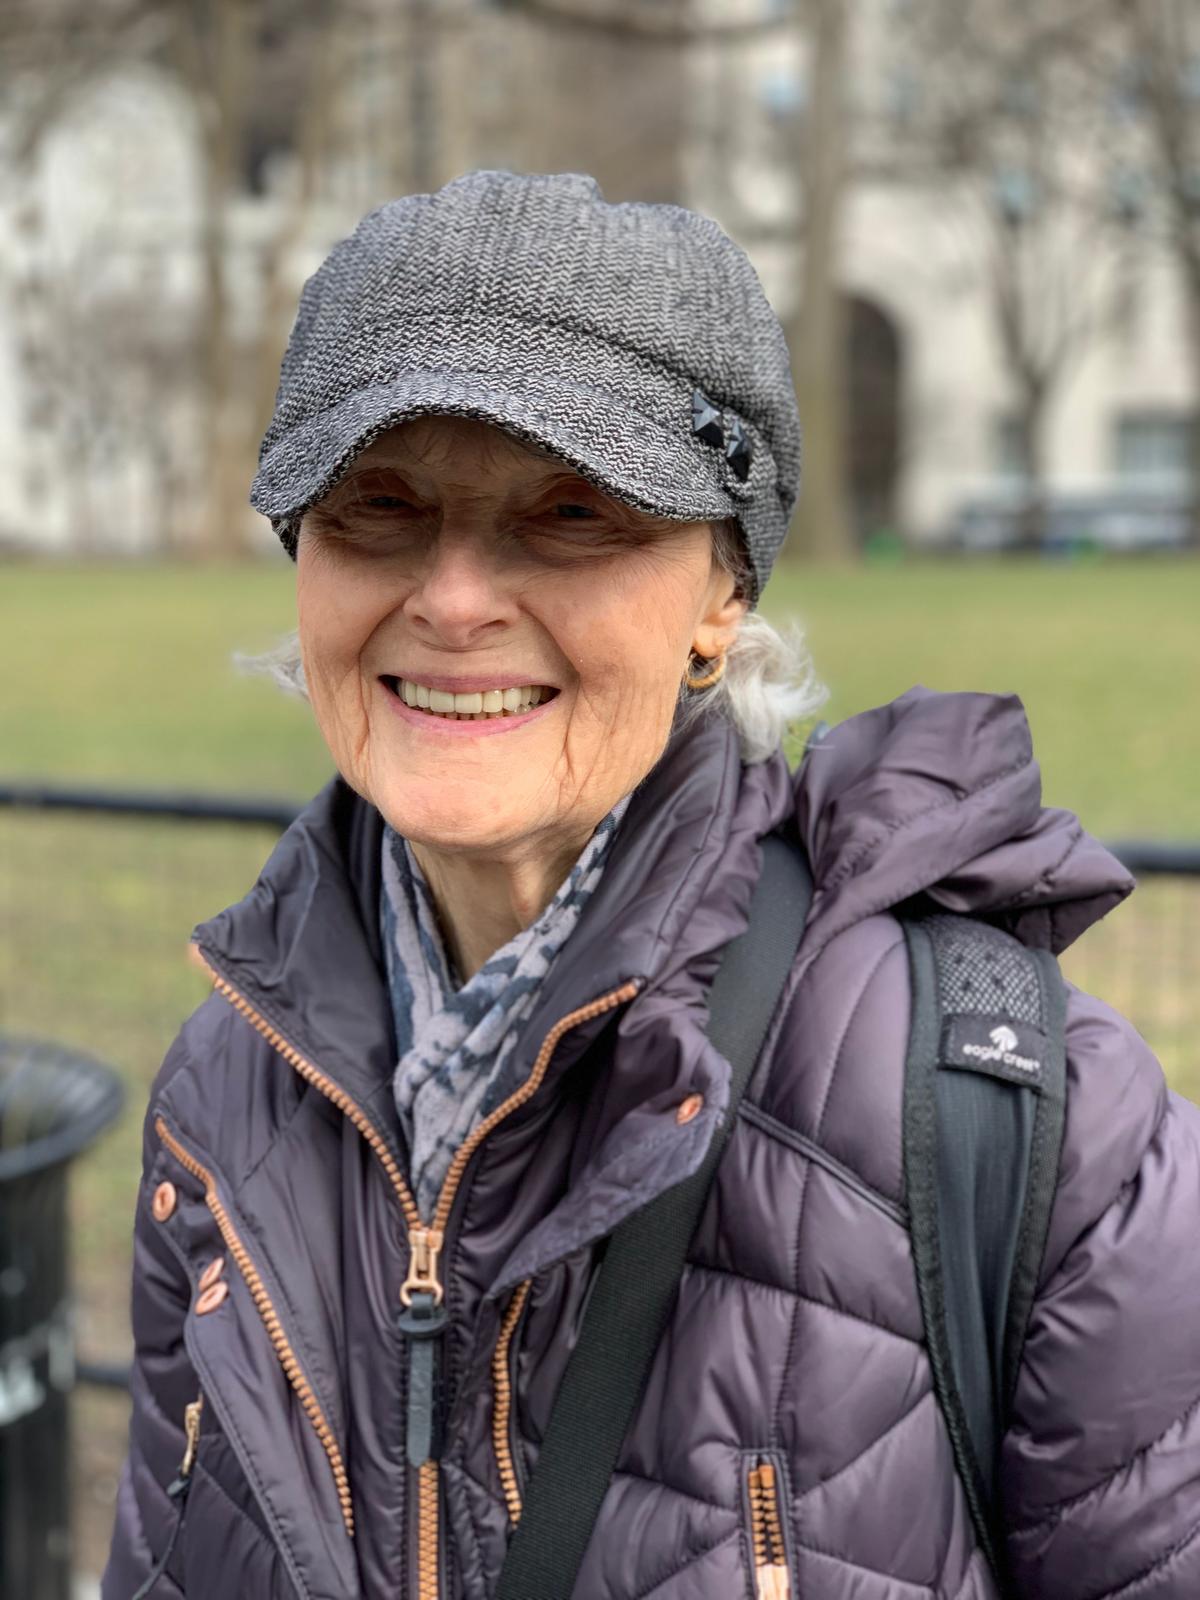 Karen in New York on March 22, 2019. (Stuart Liess / The Epoch Times)